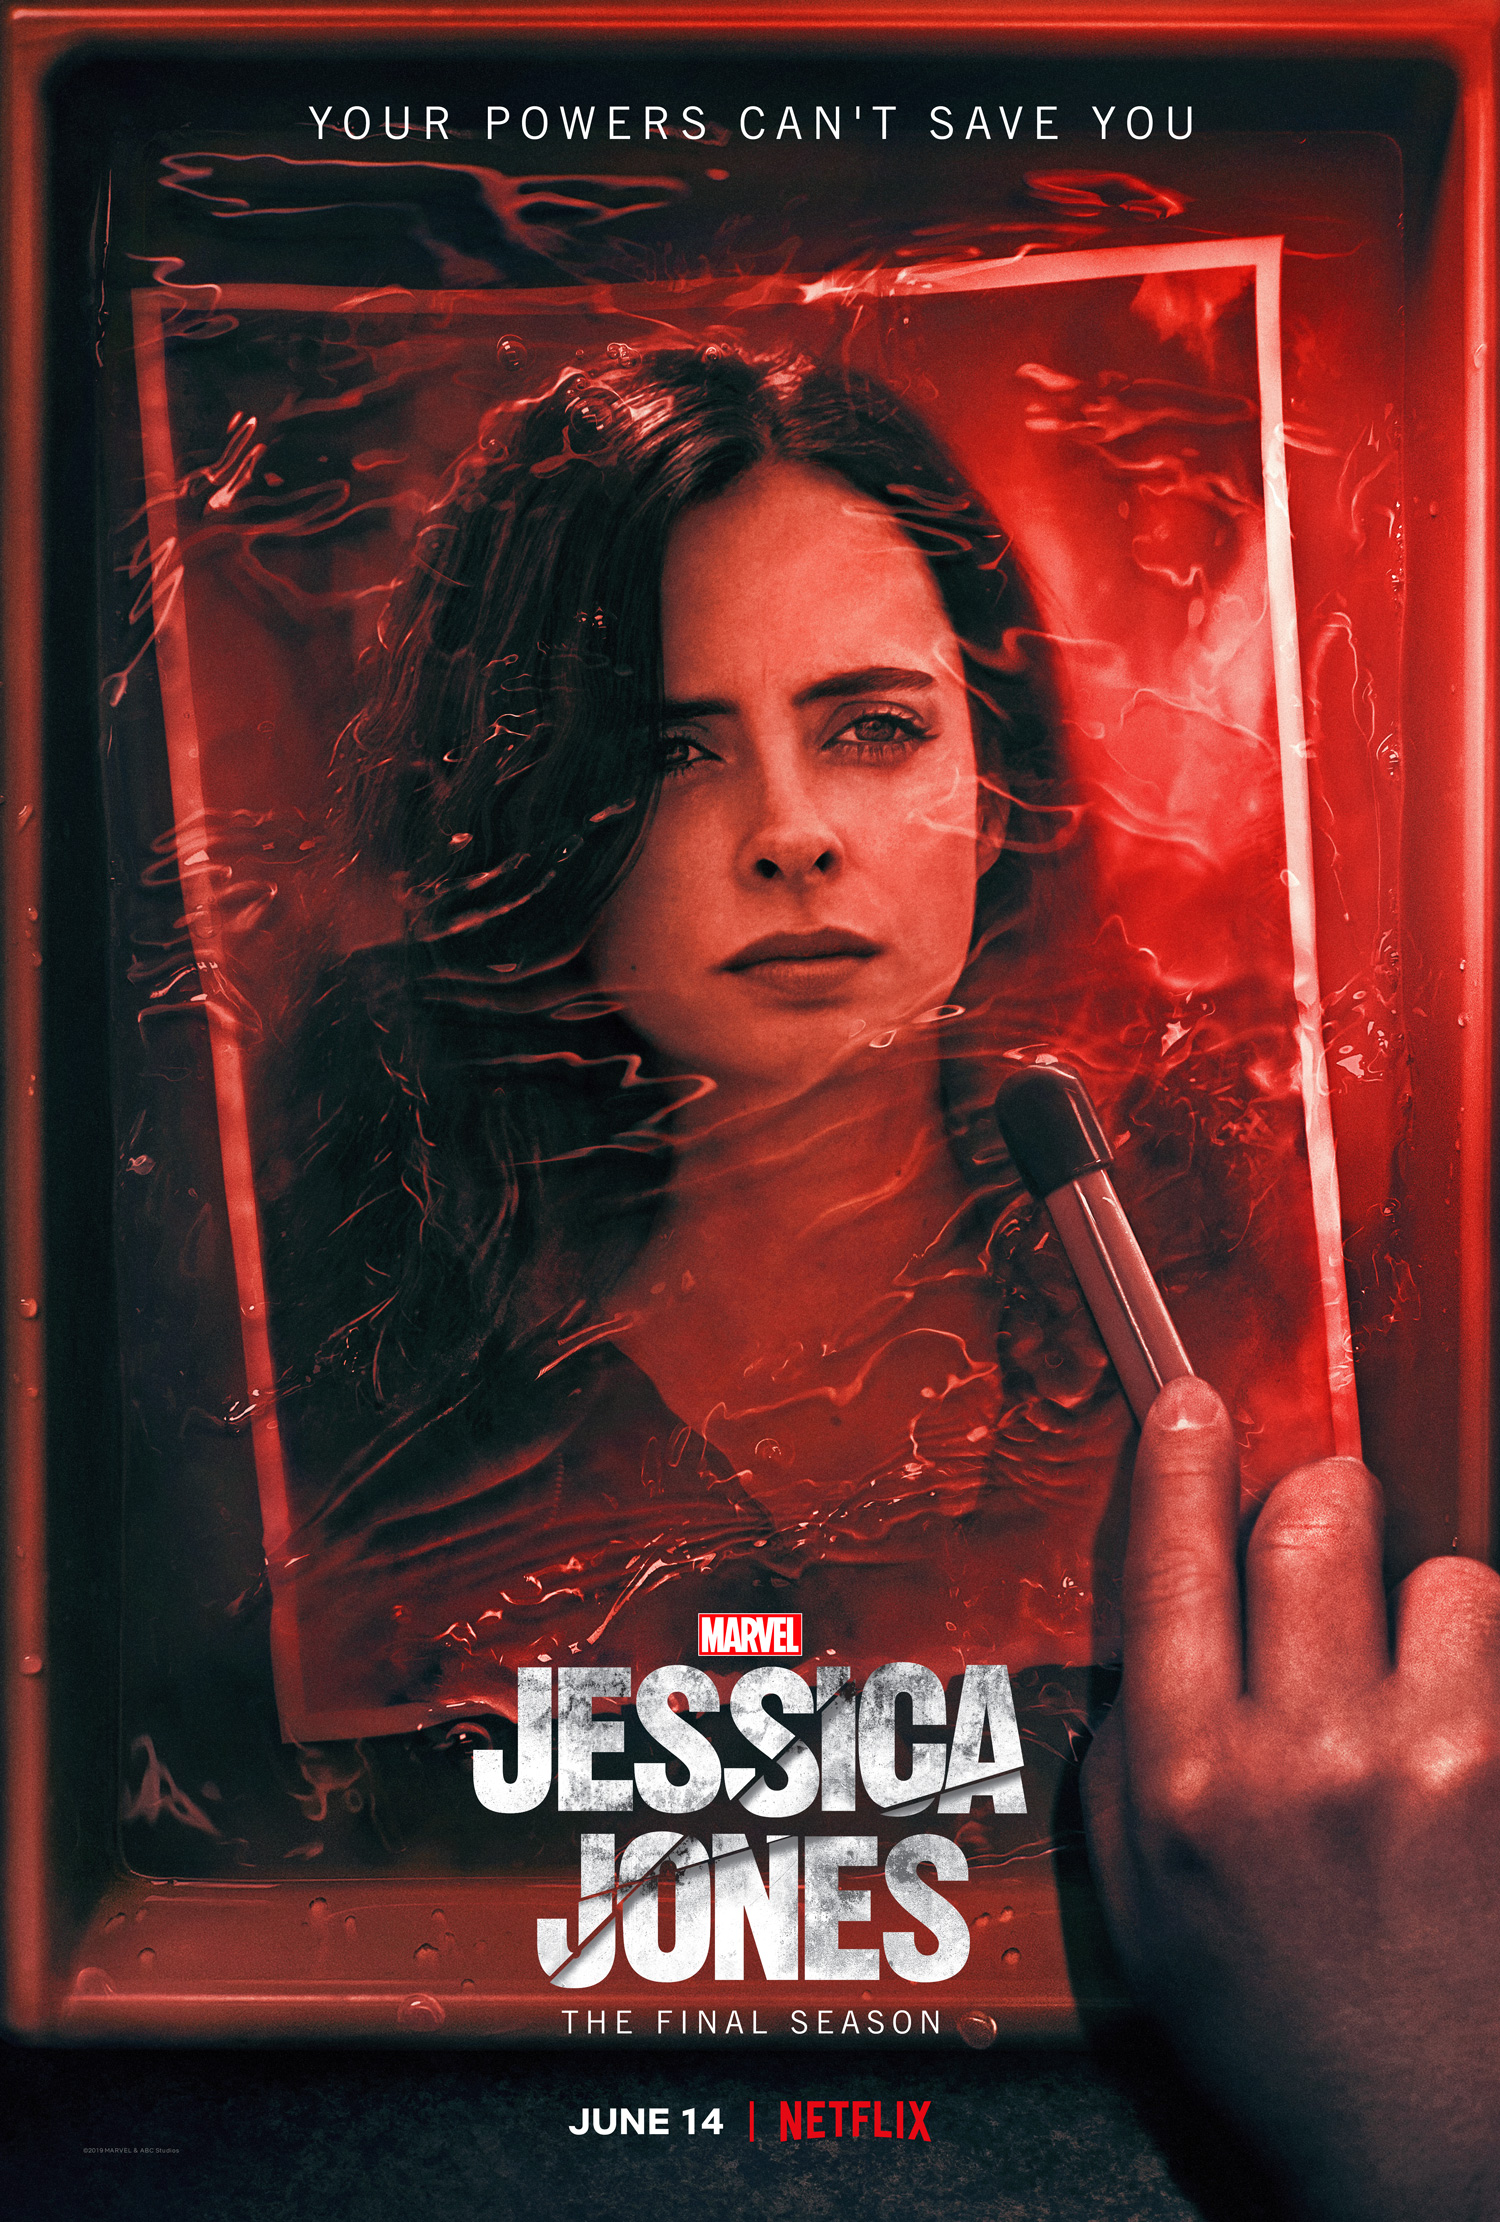 Jessica Jones season 3 trailer poster